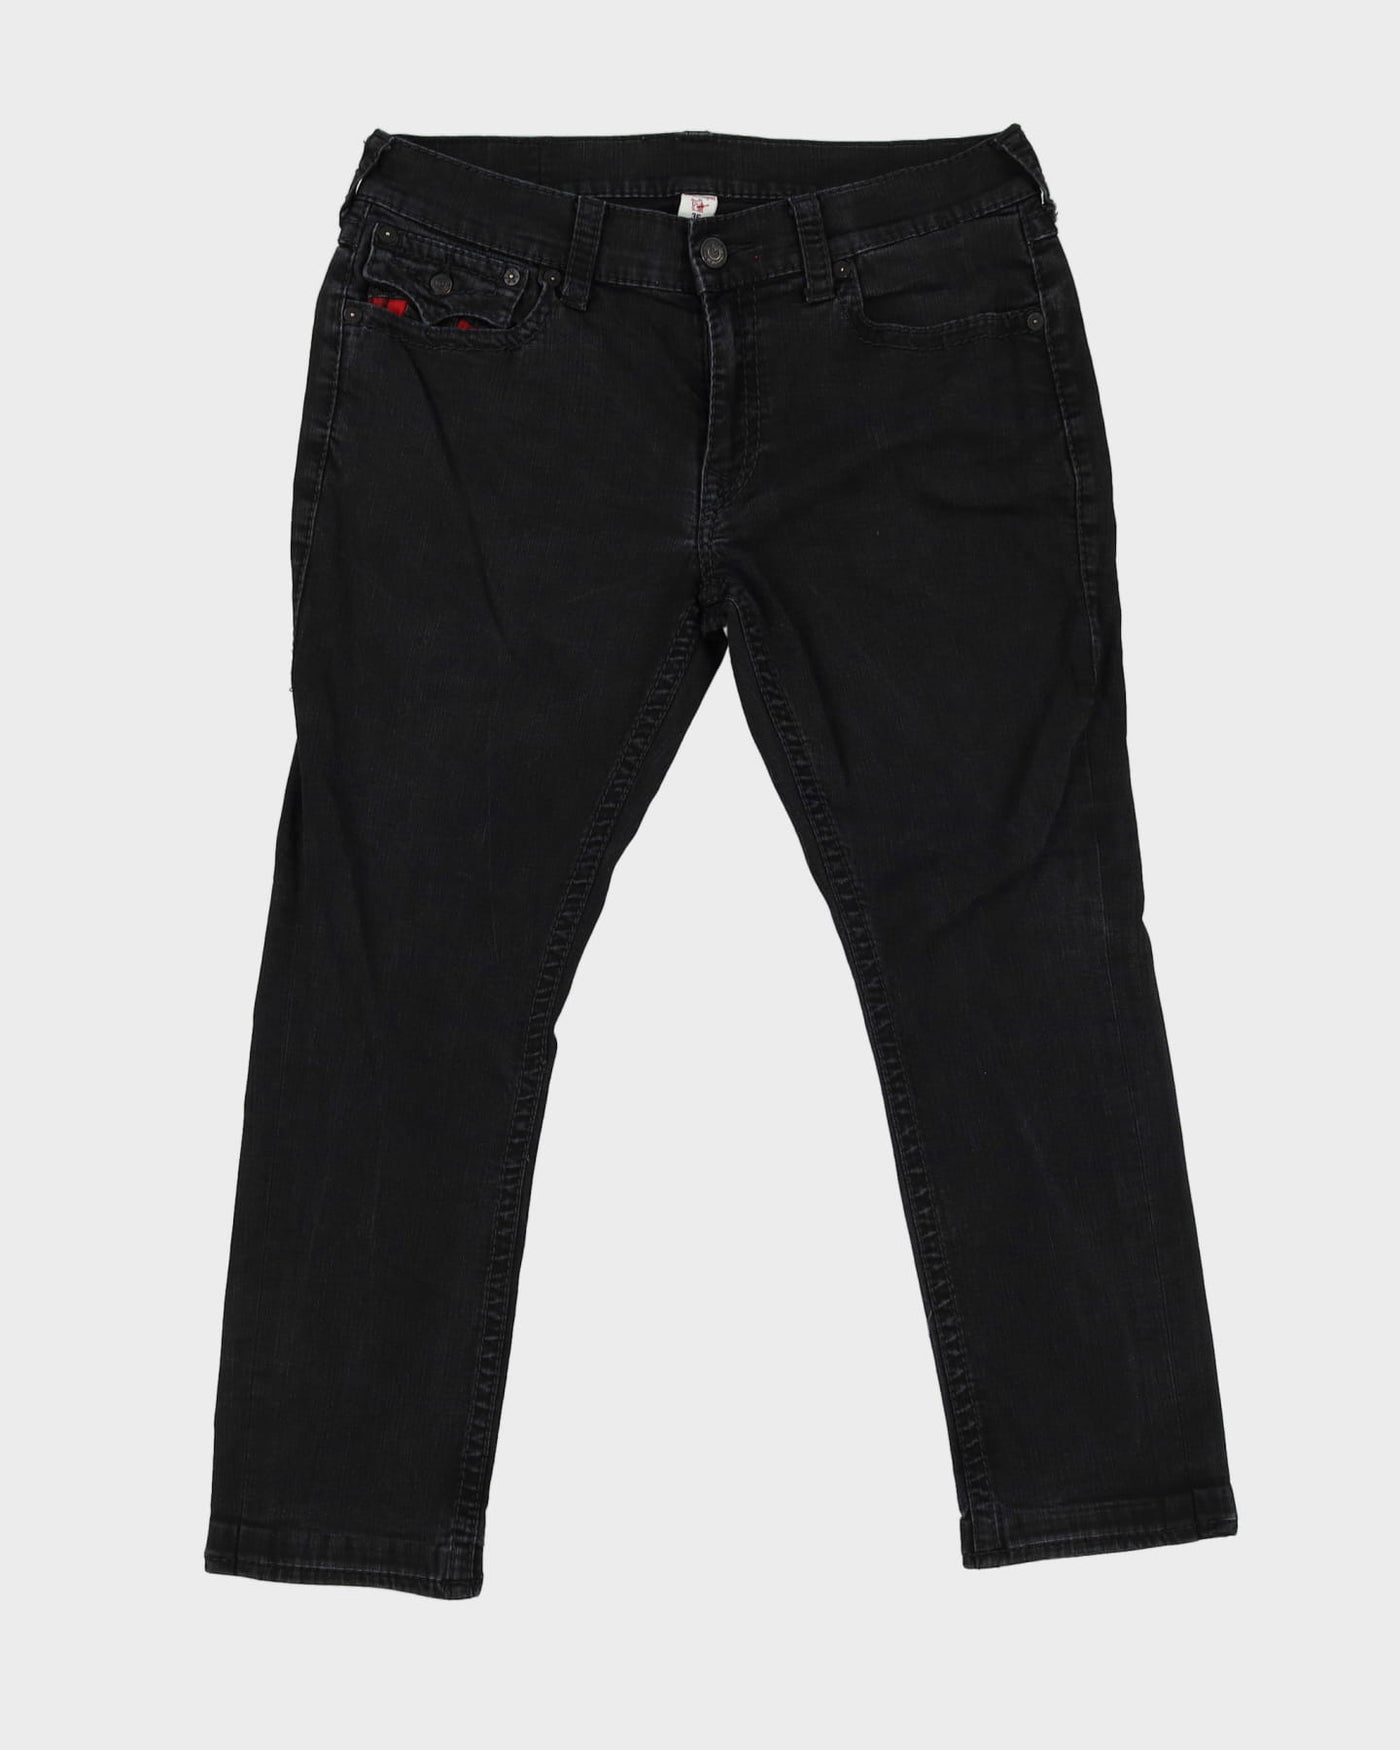 00s Y2K True Religion Black Jeans - W36 L27